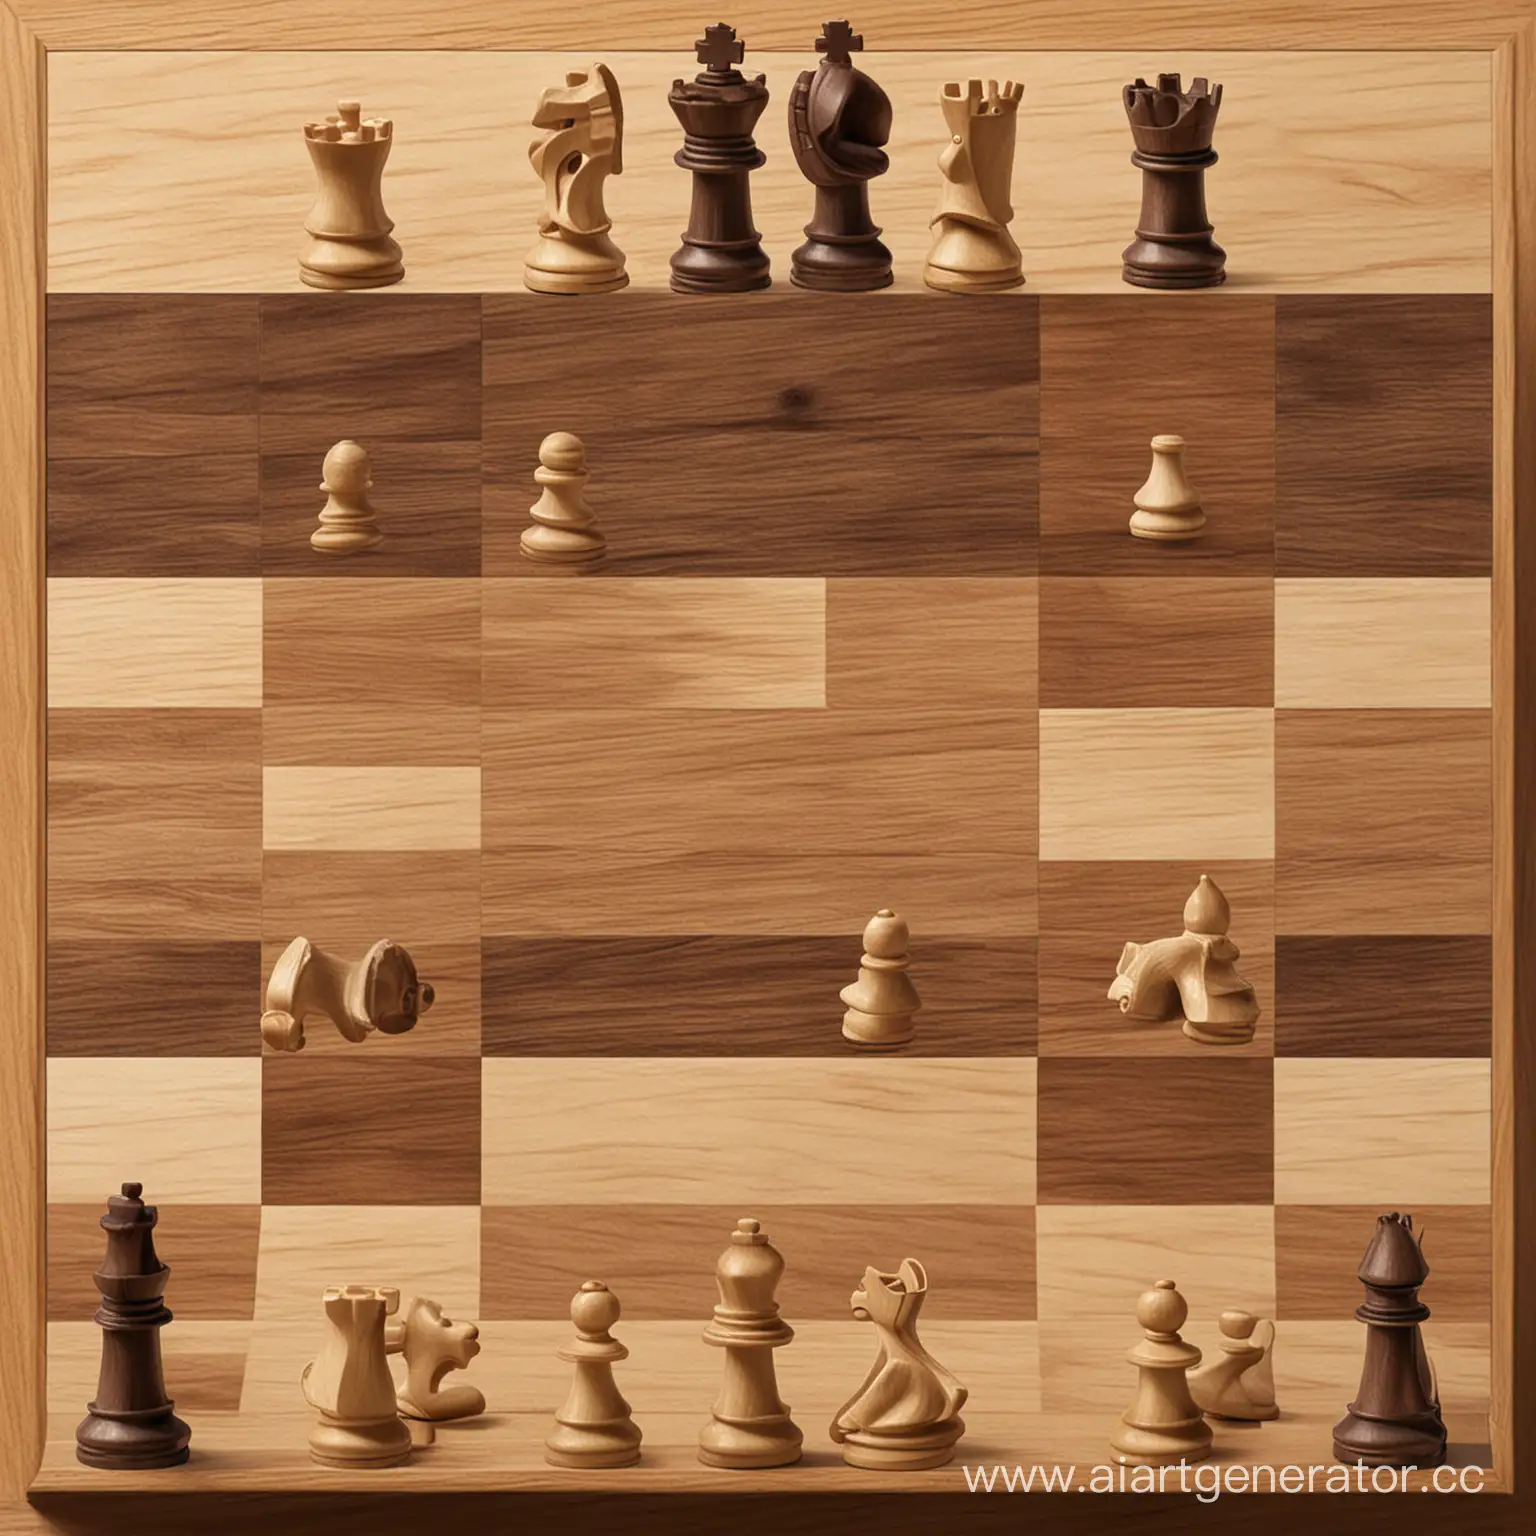 Strategic-Chess-Battle-Intense-Gameplay-on-Checkerboard